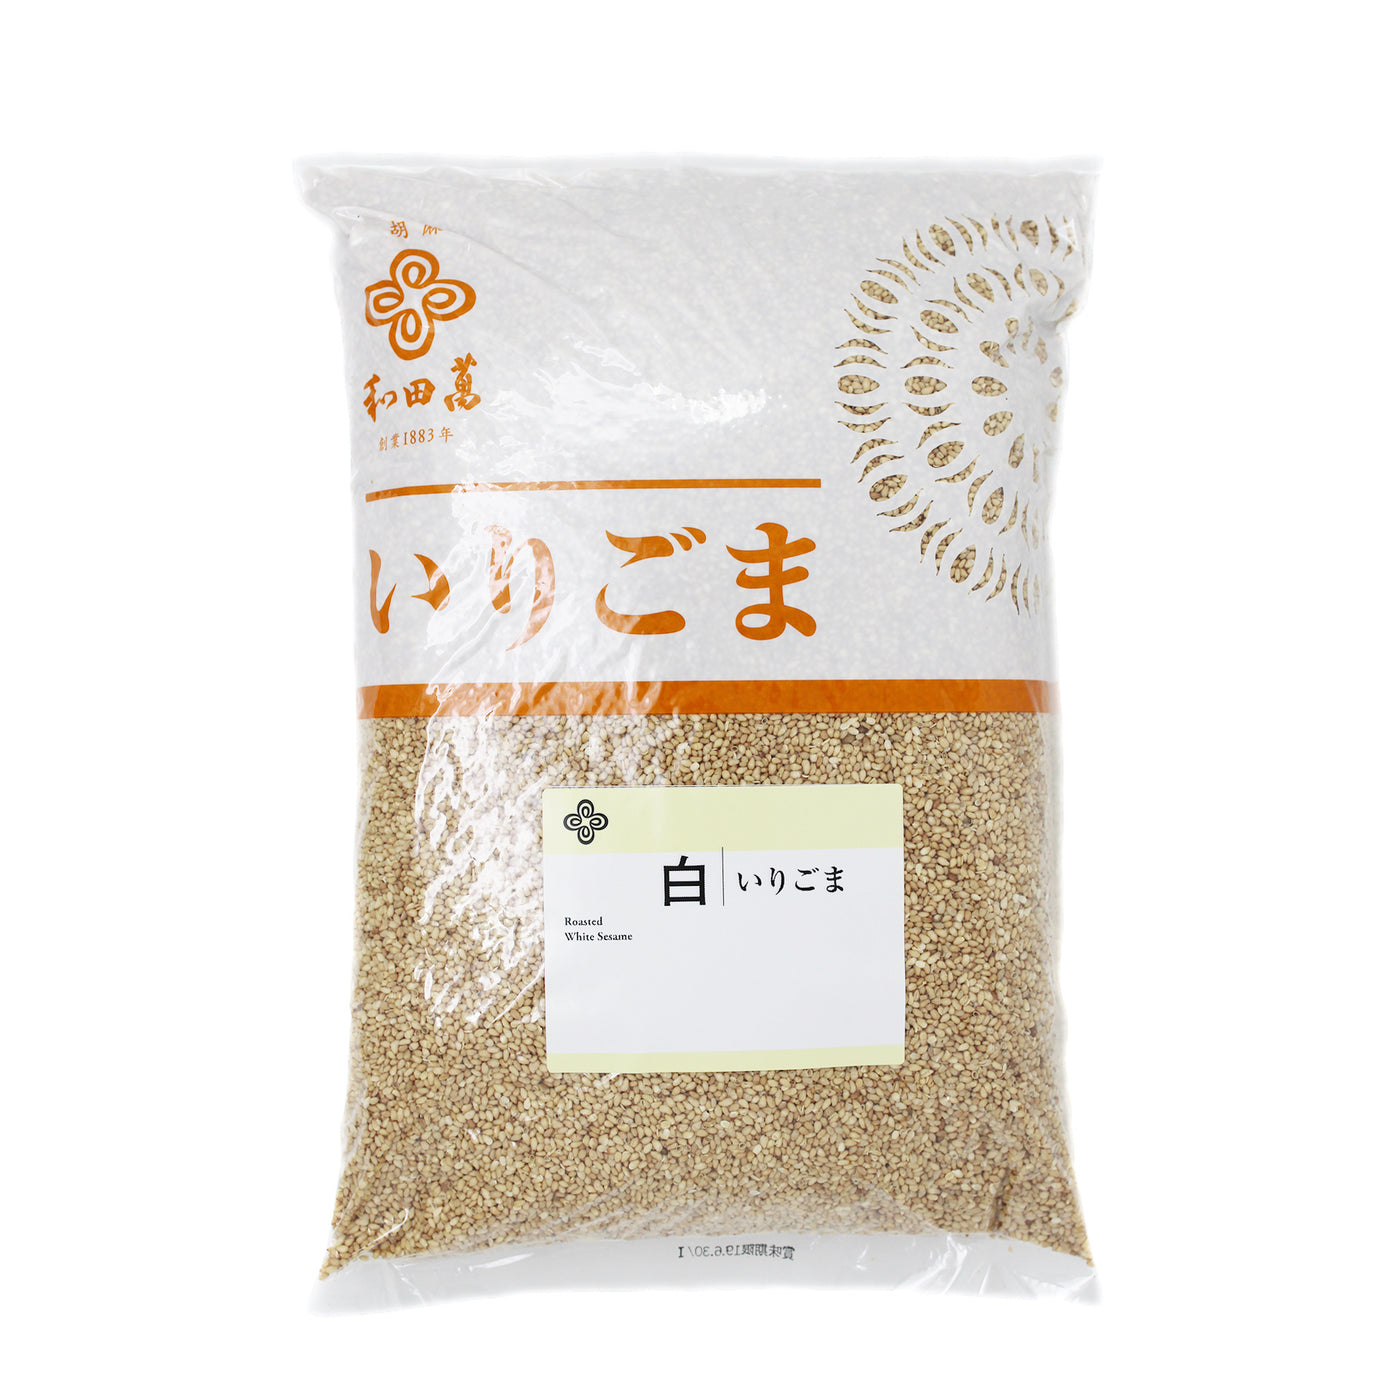 Roasted White Sesame Seeds - 1kg